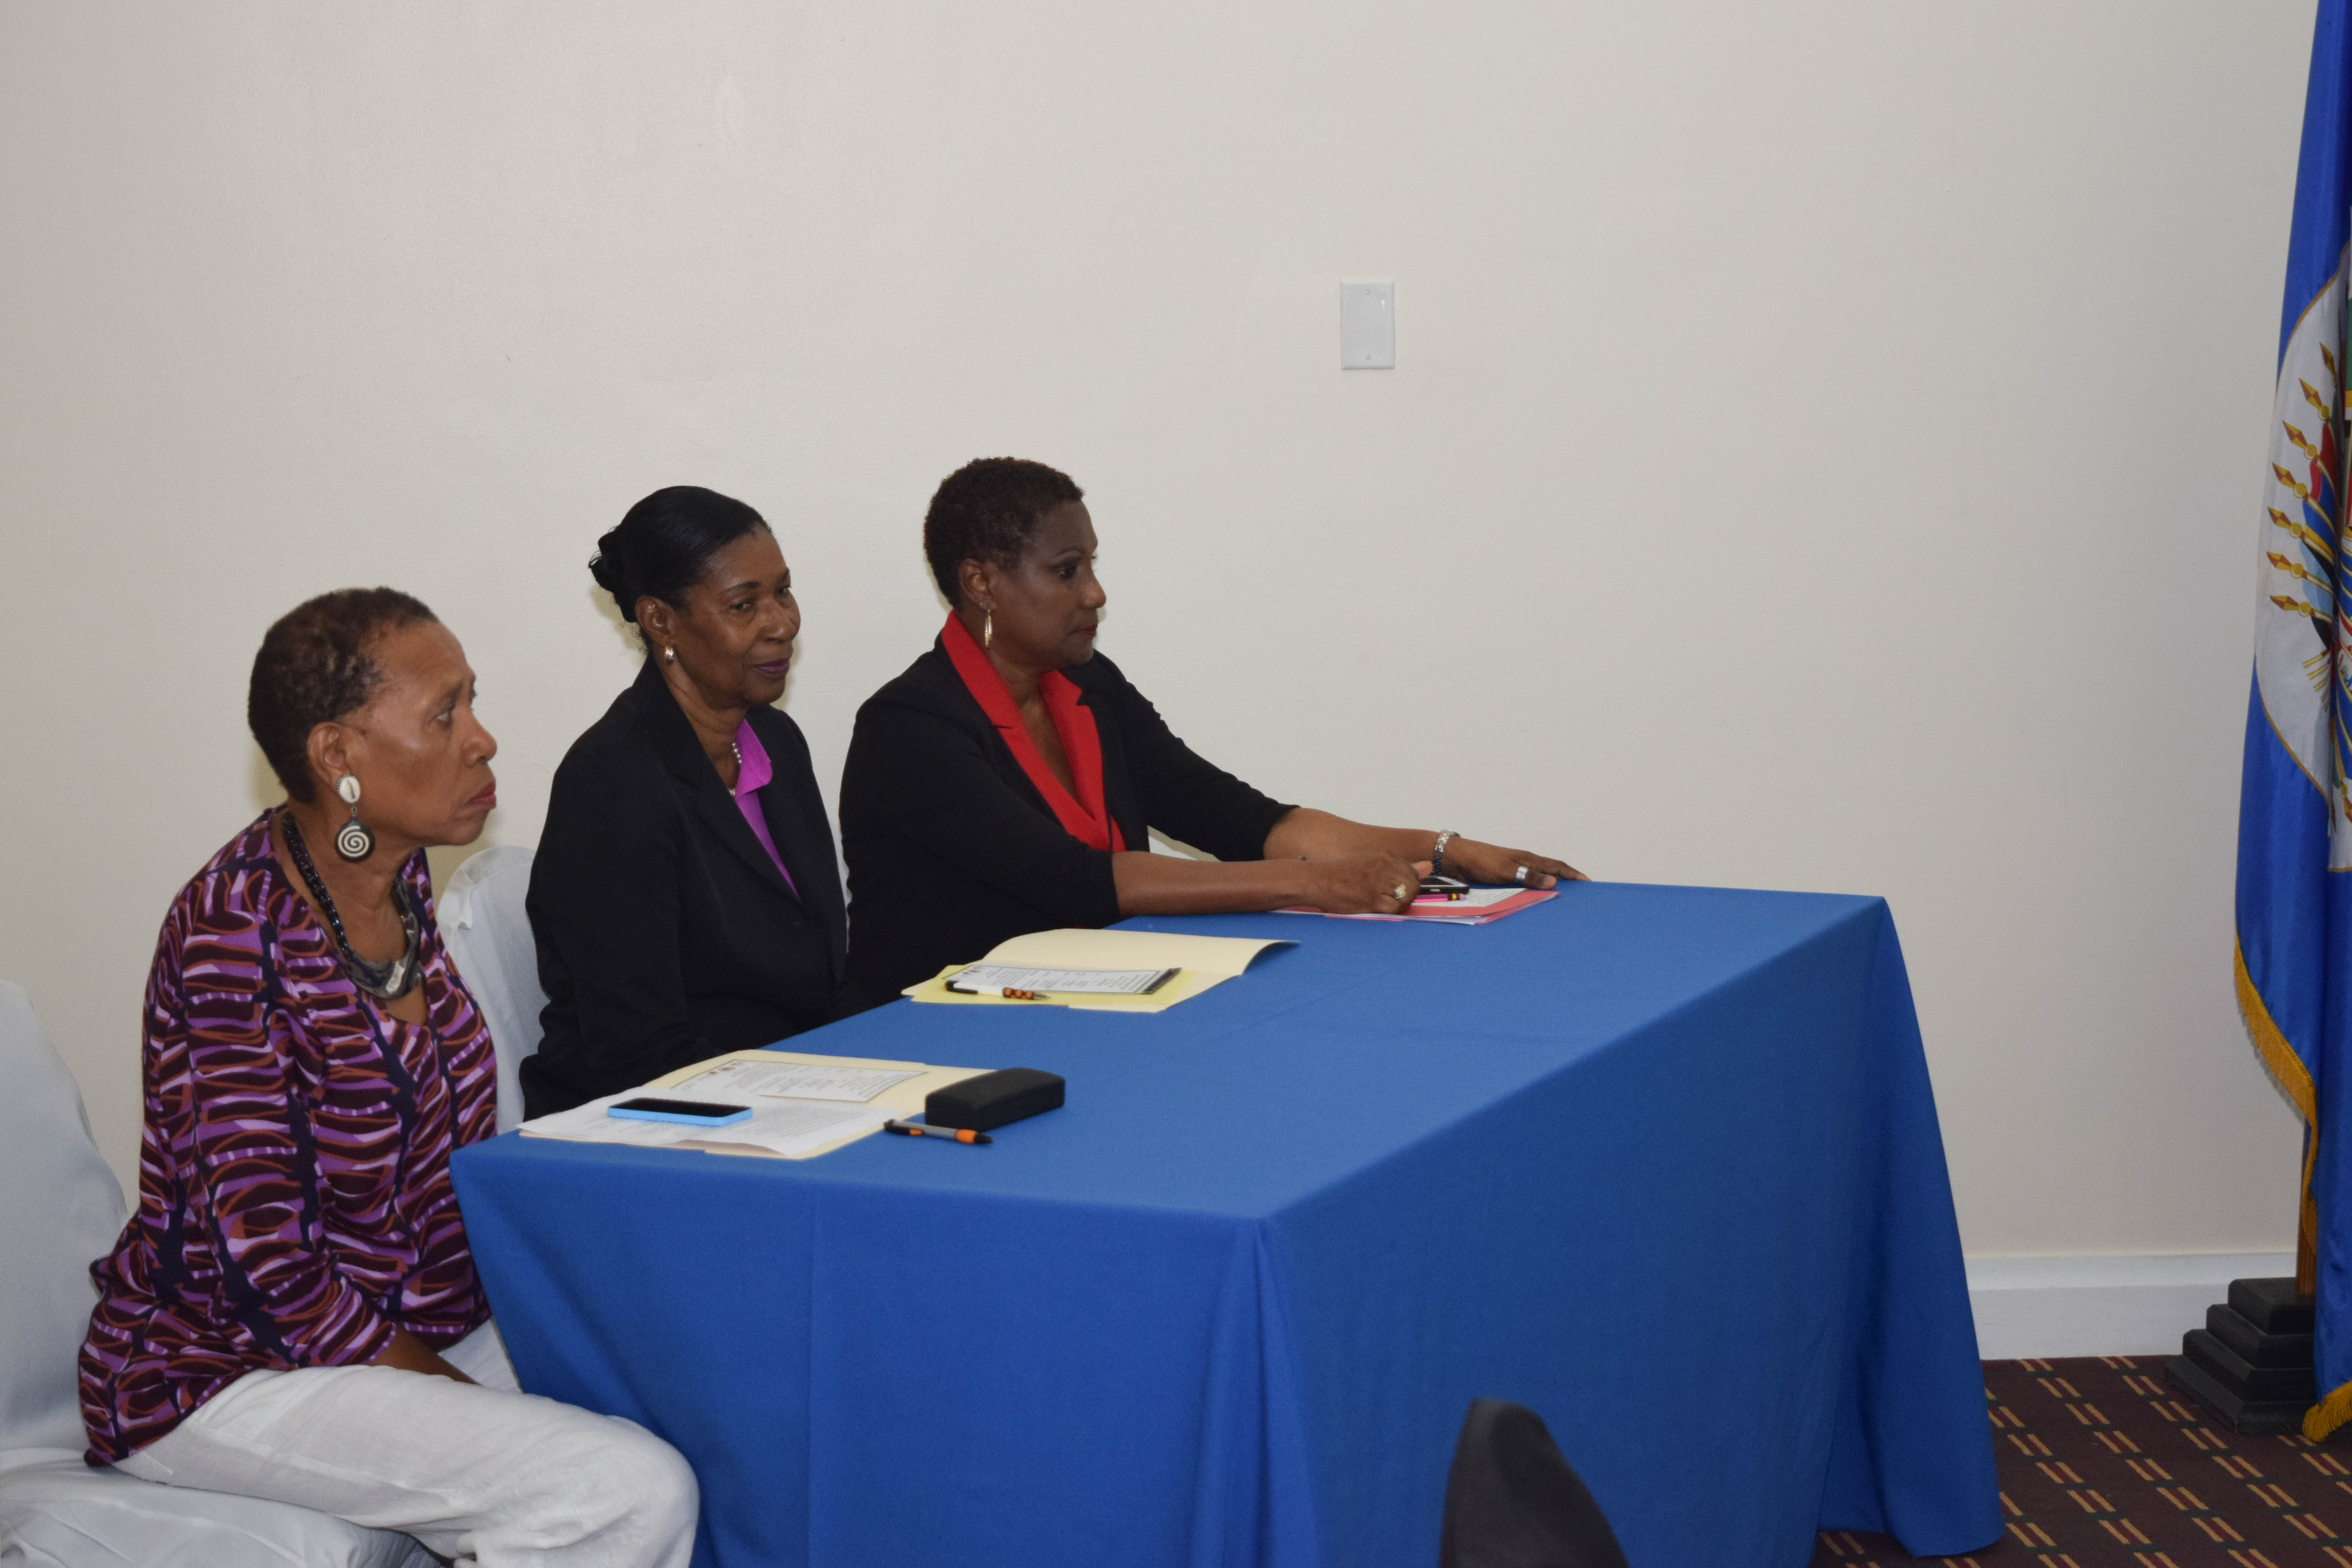 OAS Sponsored Artisanal Producers Workshop - October 25, 2018 - Basseterre, St Kitts(October 29, 2018)